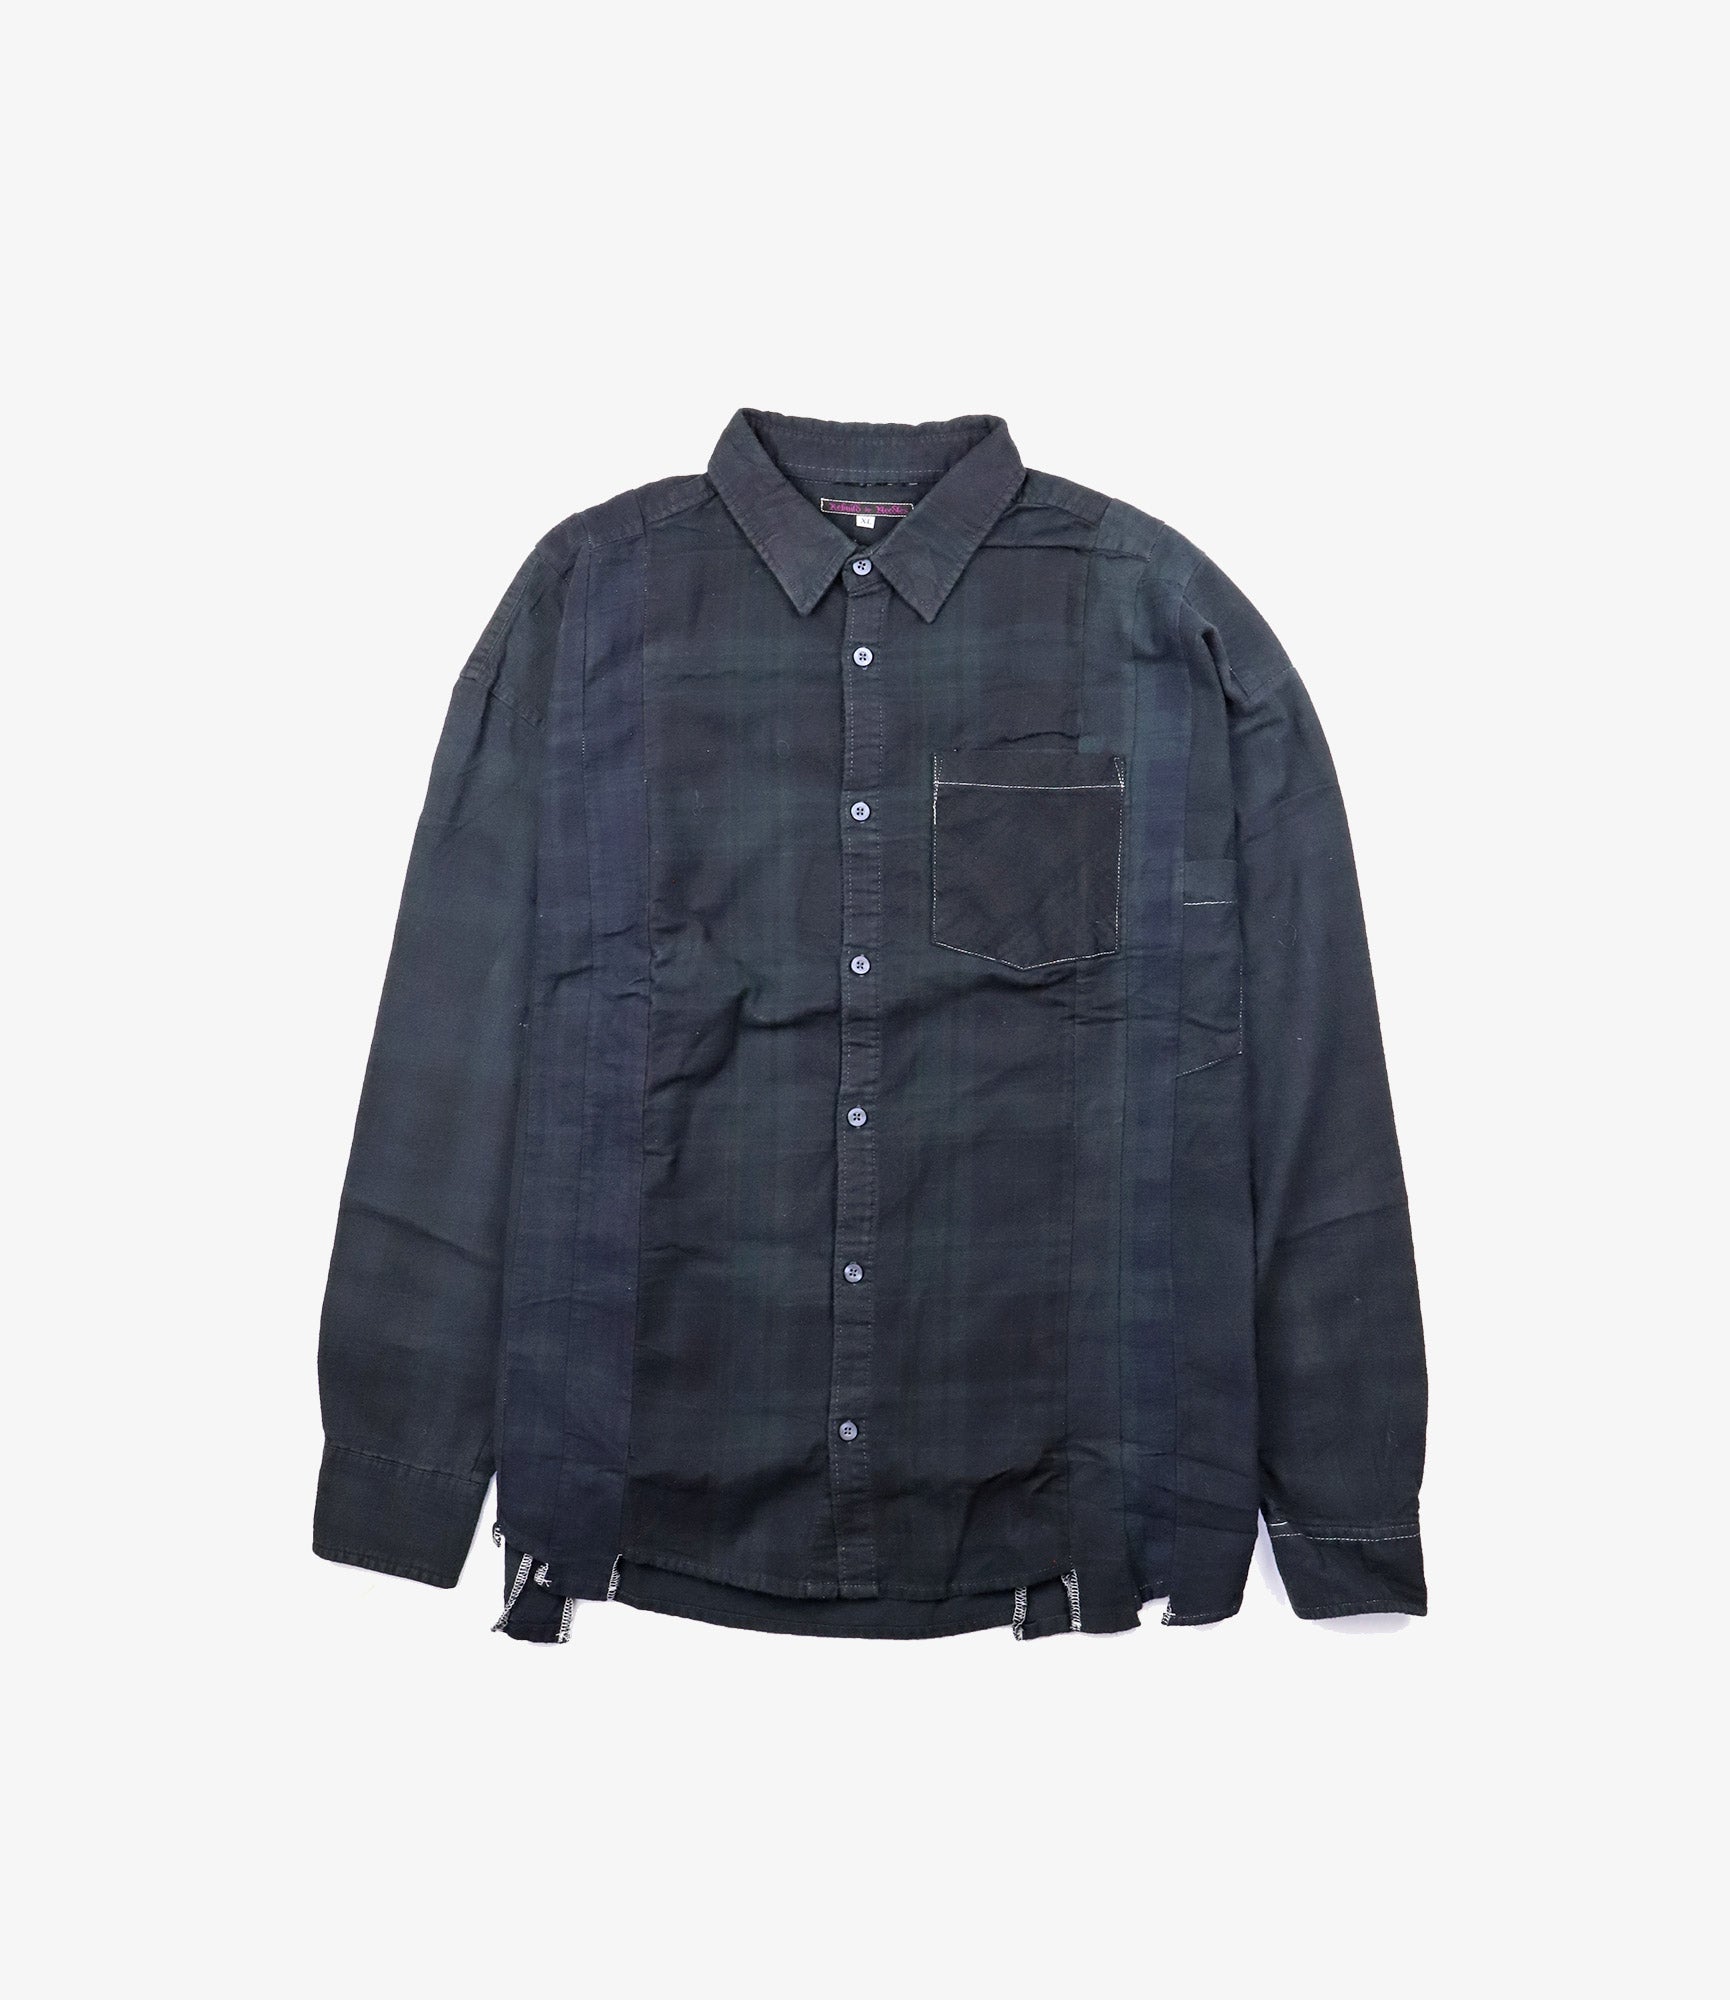 Rebuild by Needles Flannel Shirt - 7 Cuts Shirt / Over Dye - Black